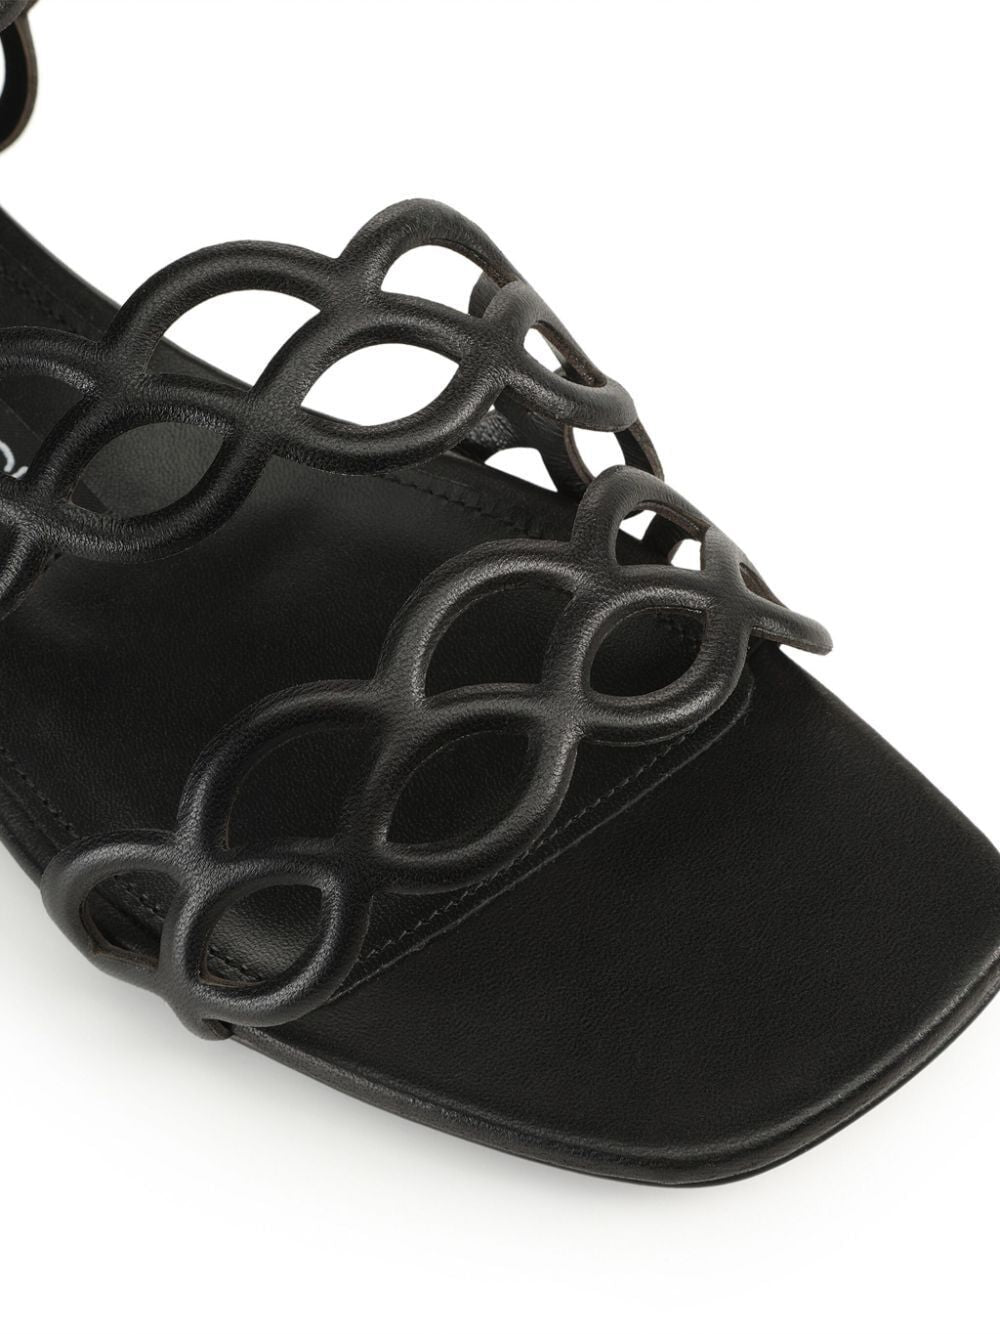 SERGIO ROSSI Black Leather Mermaid Sandals for Women